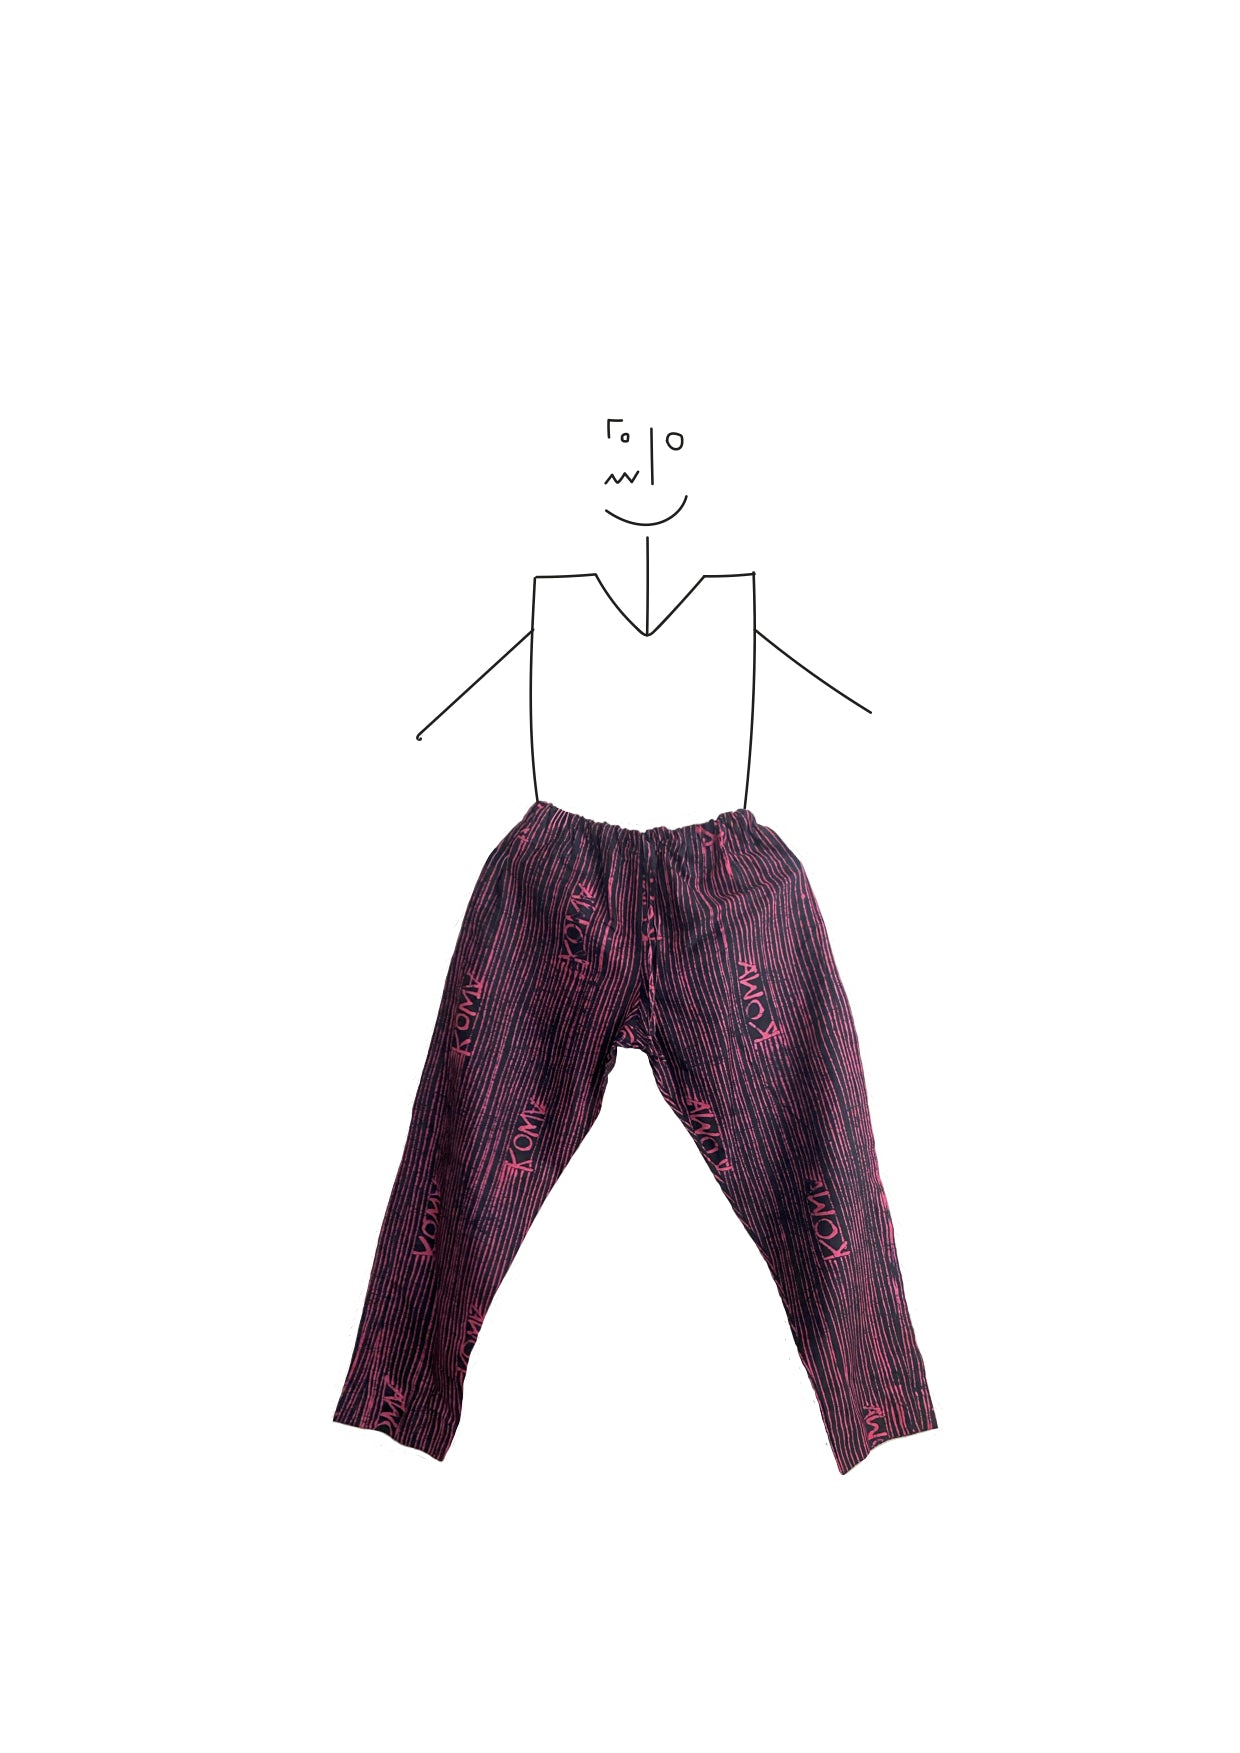 Trousers- Indigo and pink Kowa lines